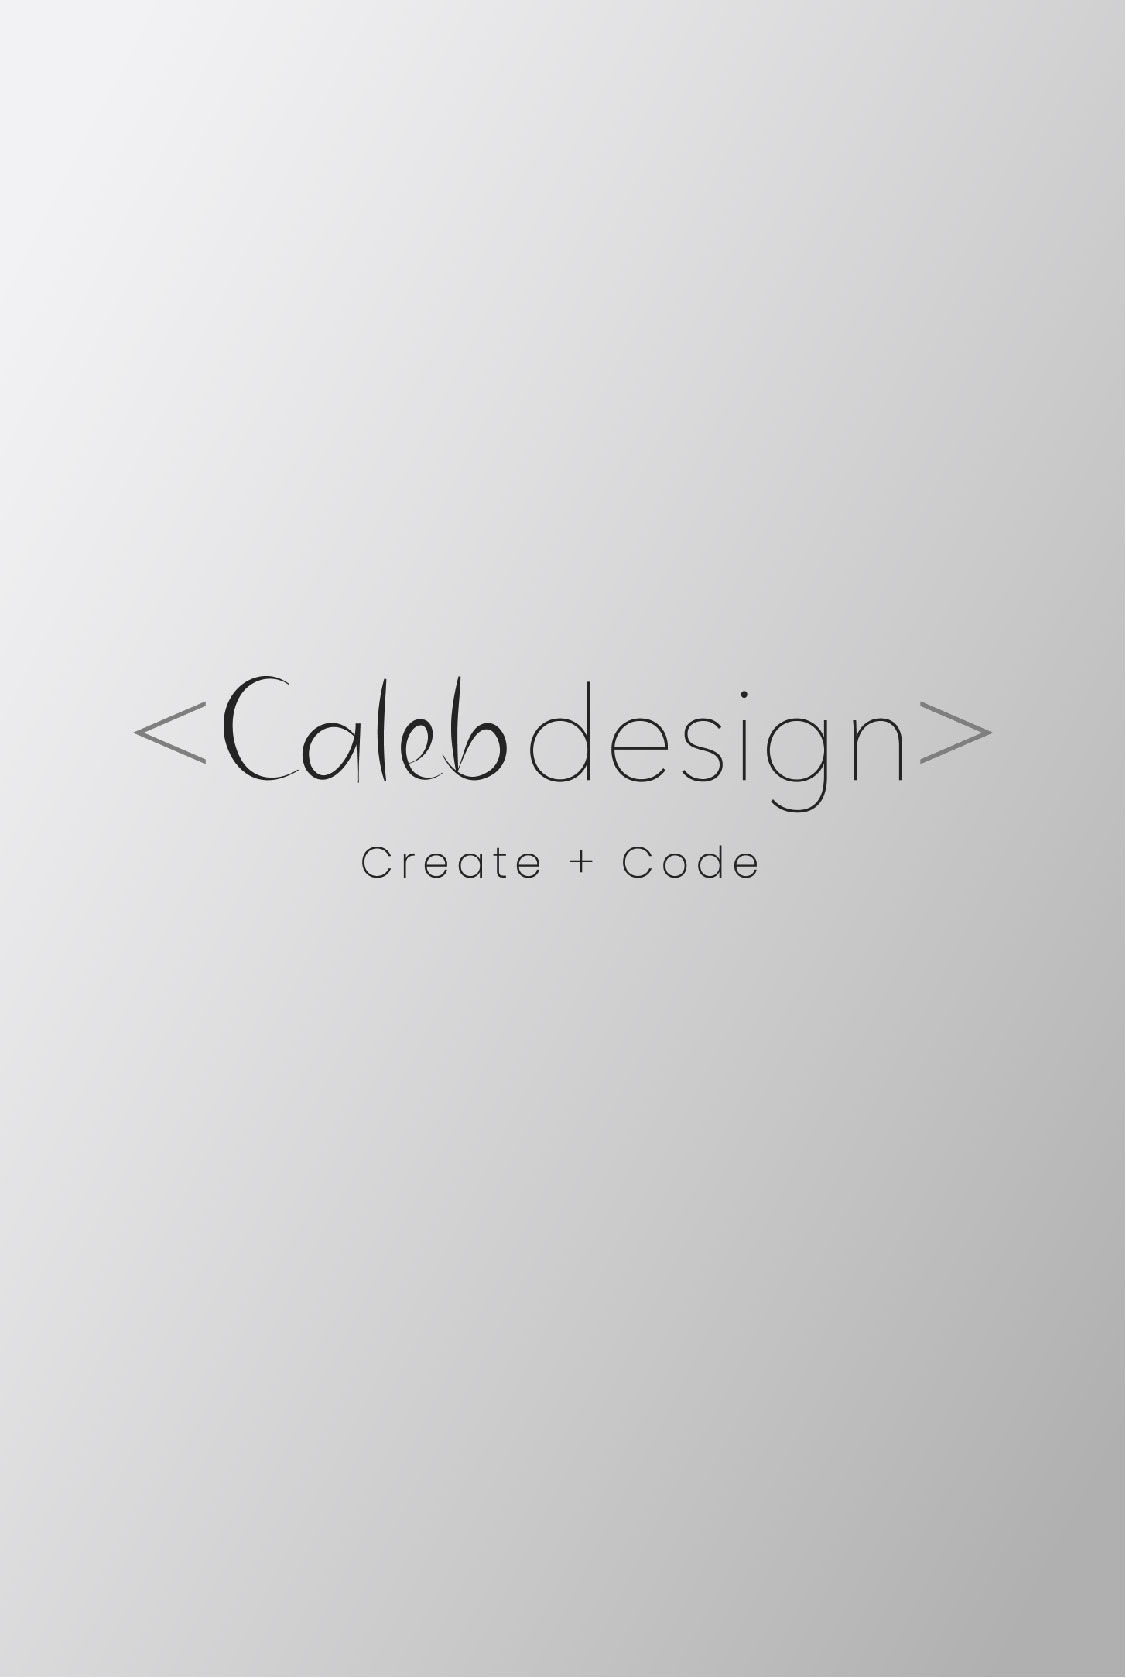 Caleb design banner